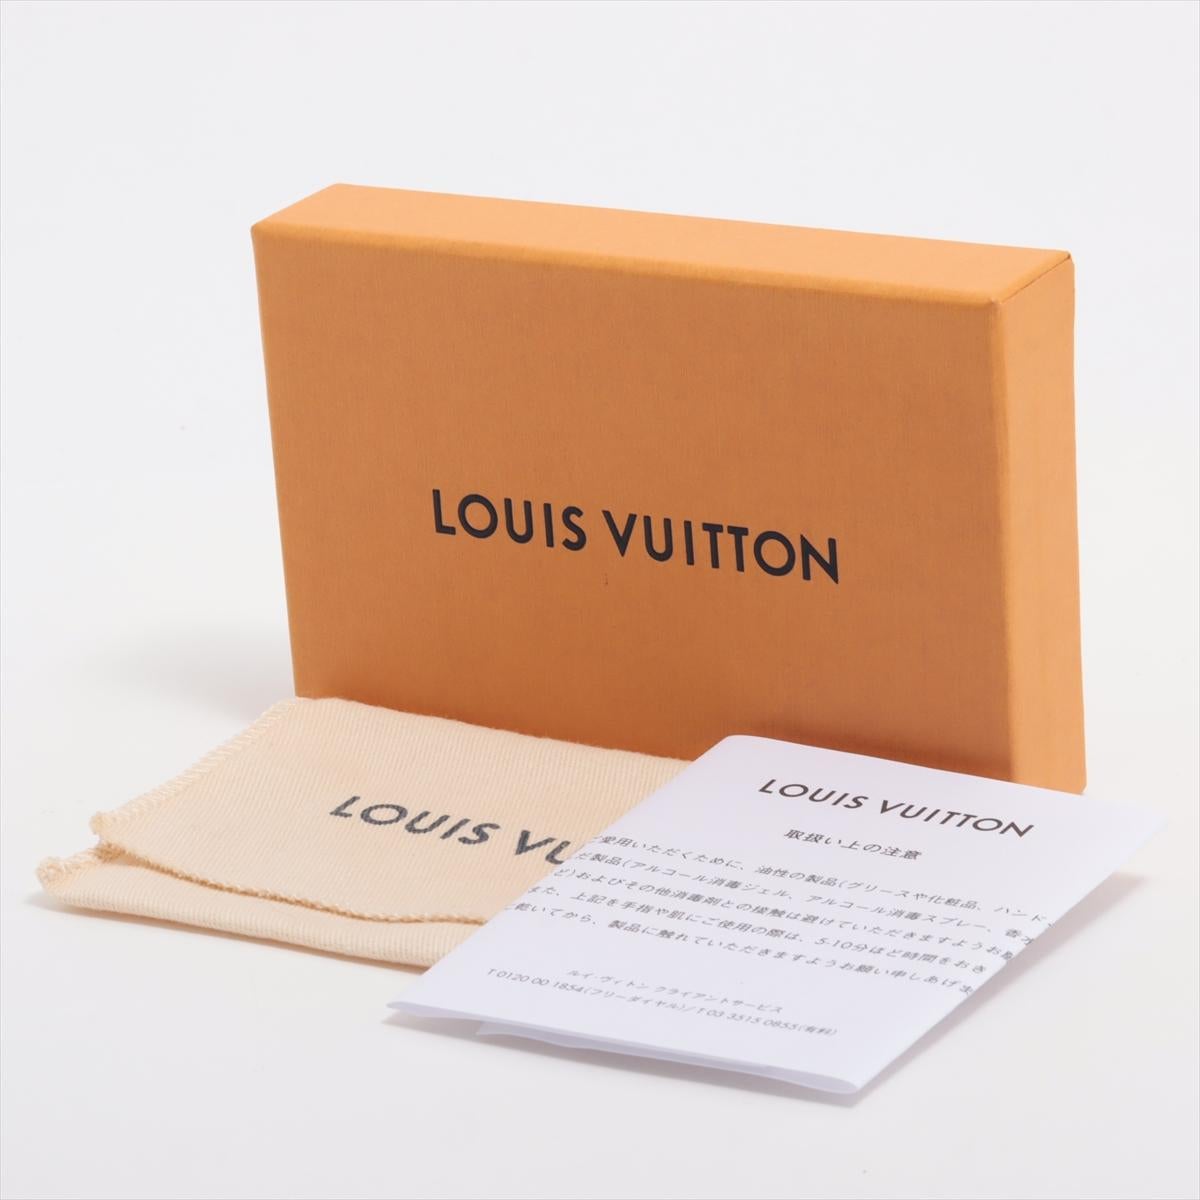 Louis Vuitton Spring Street Bag Charm For Sale 2